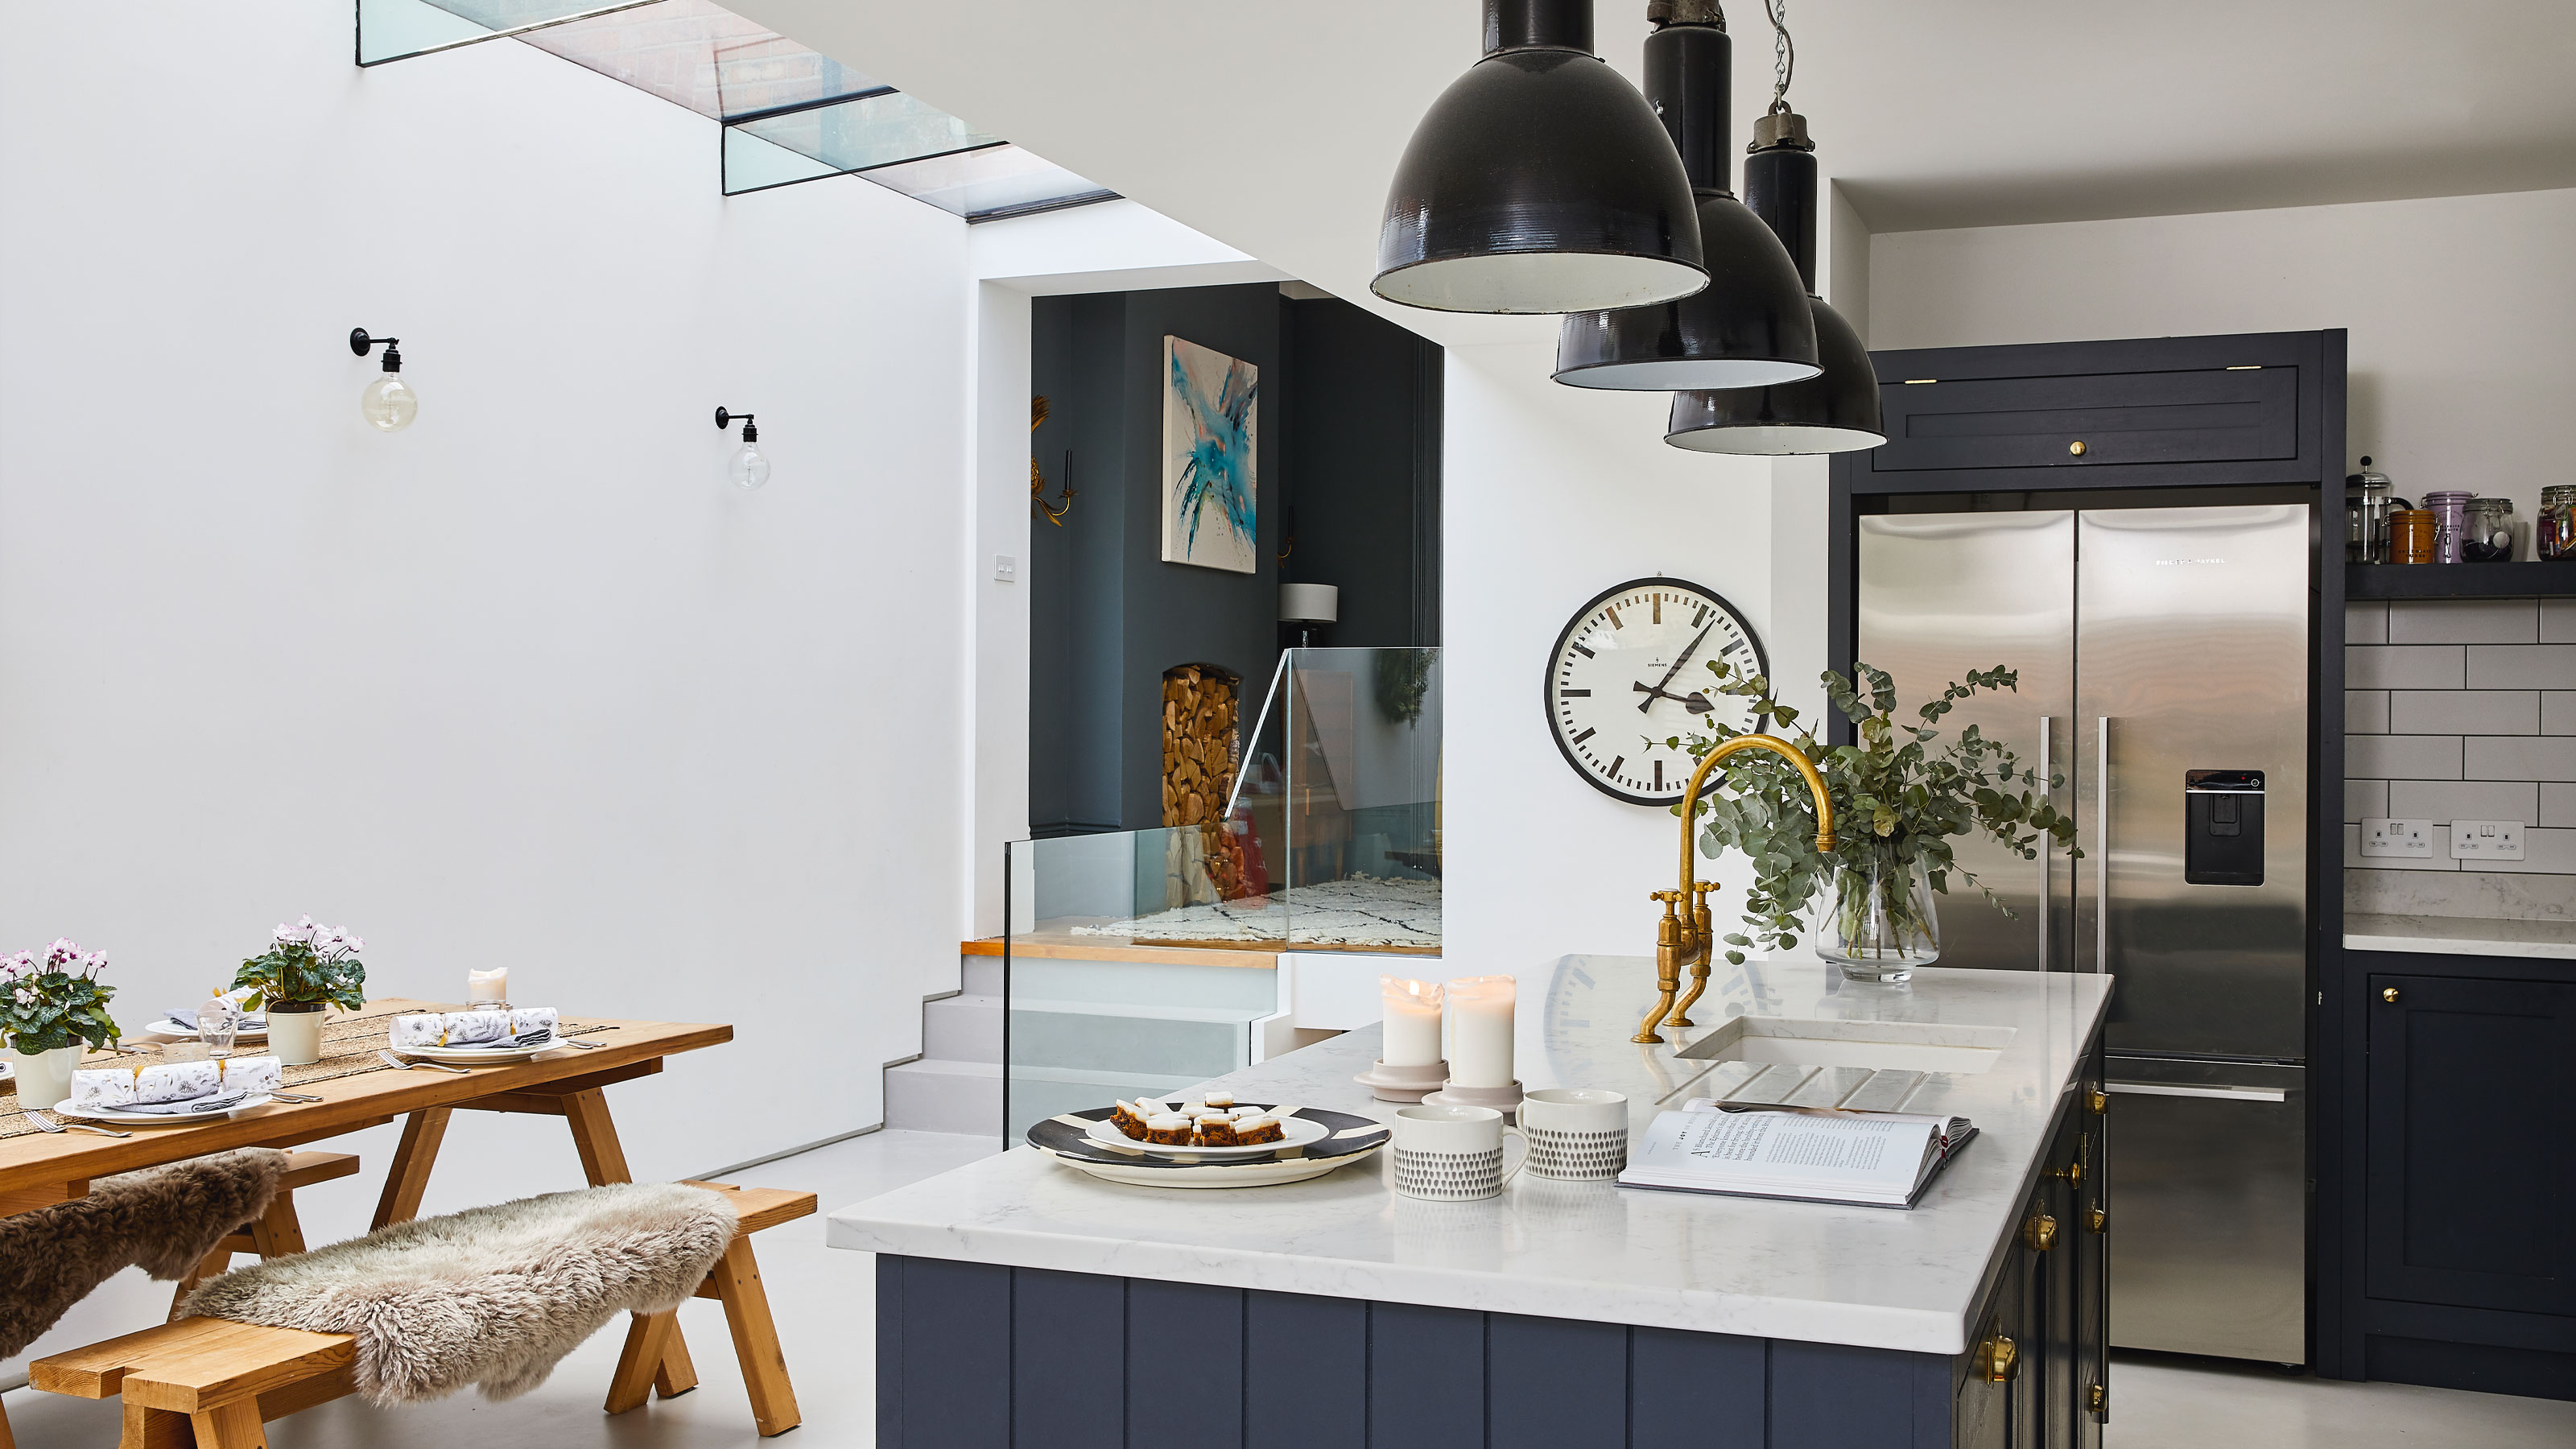 Explore Refrigerators Designed to Inspire Creativity